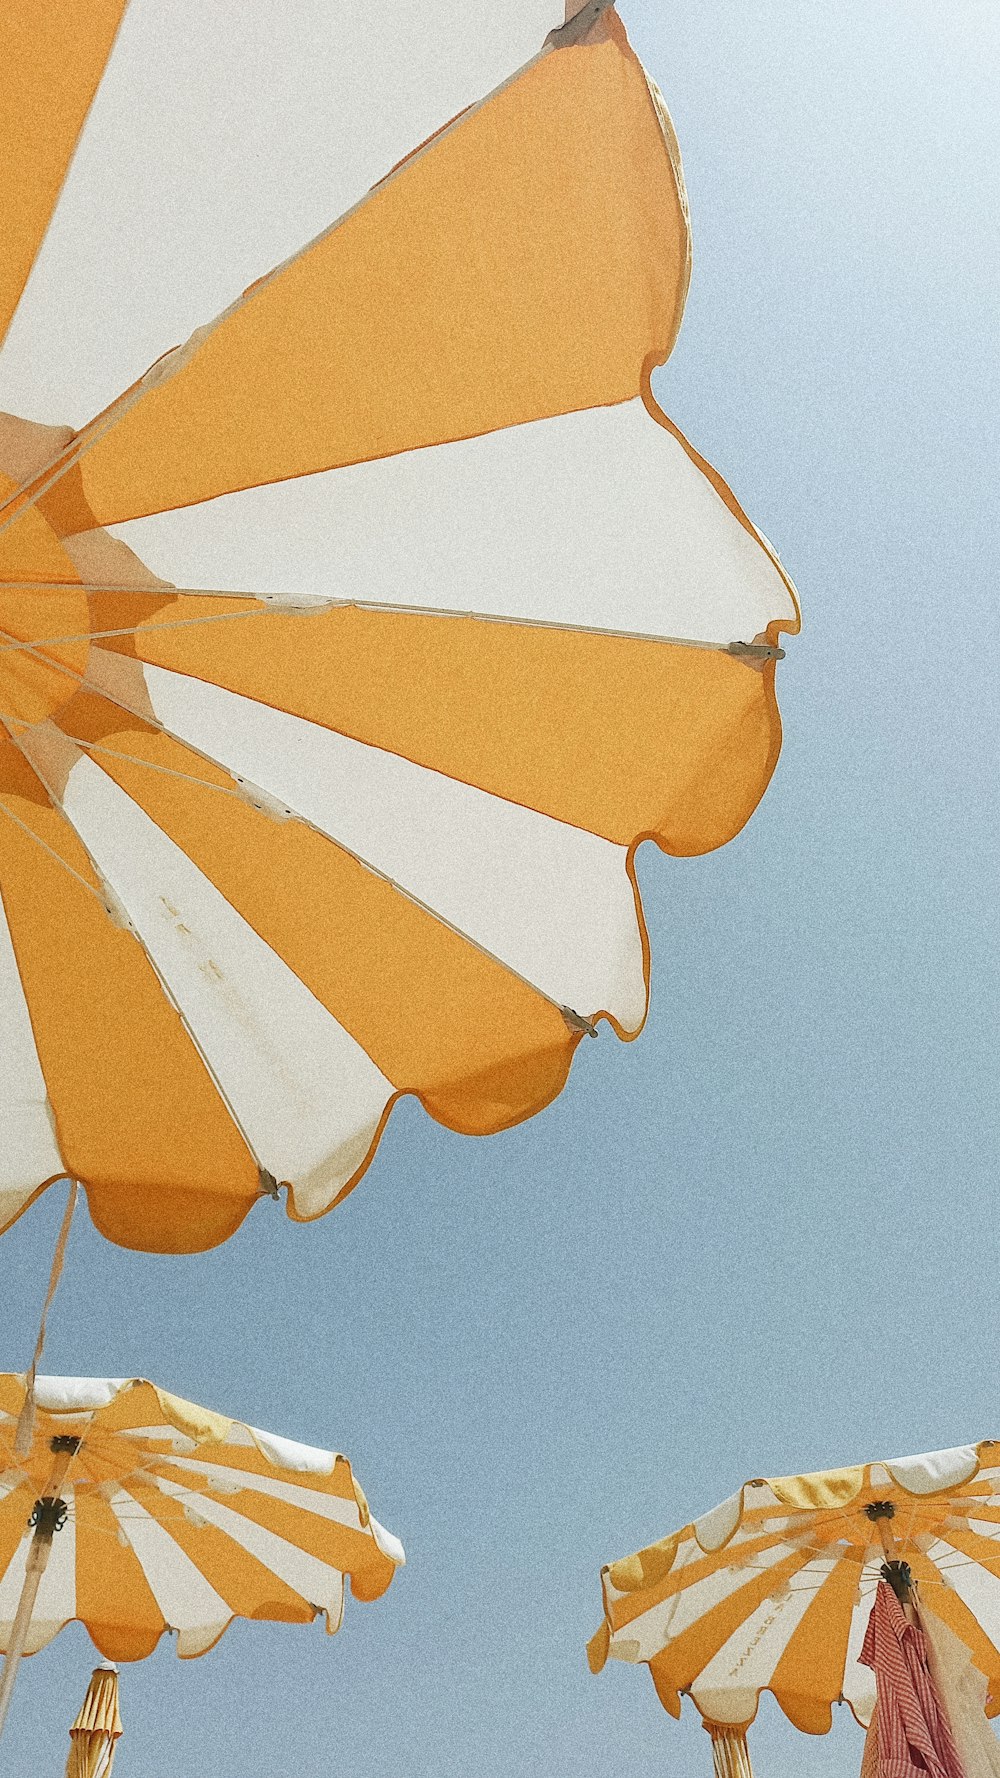 yellow and orange umbrella under blue sky during daytime